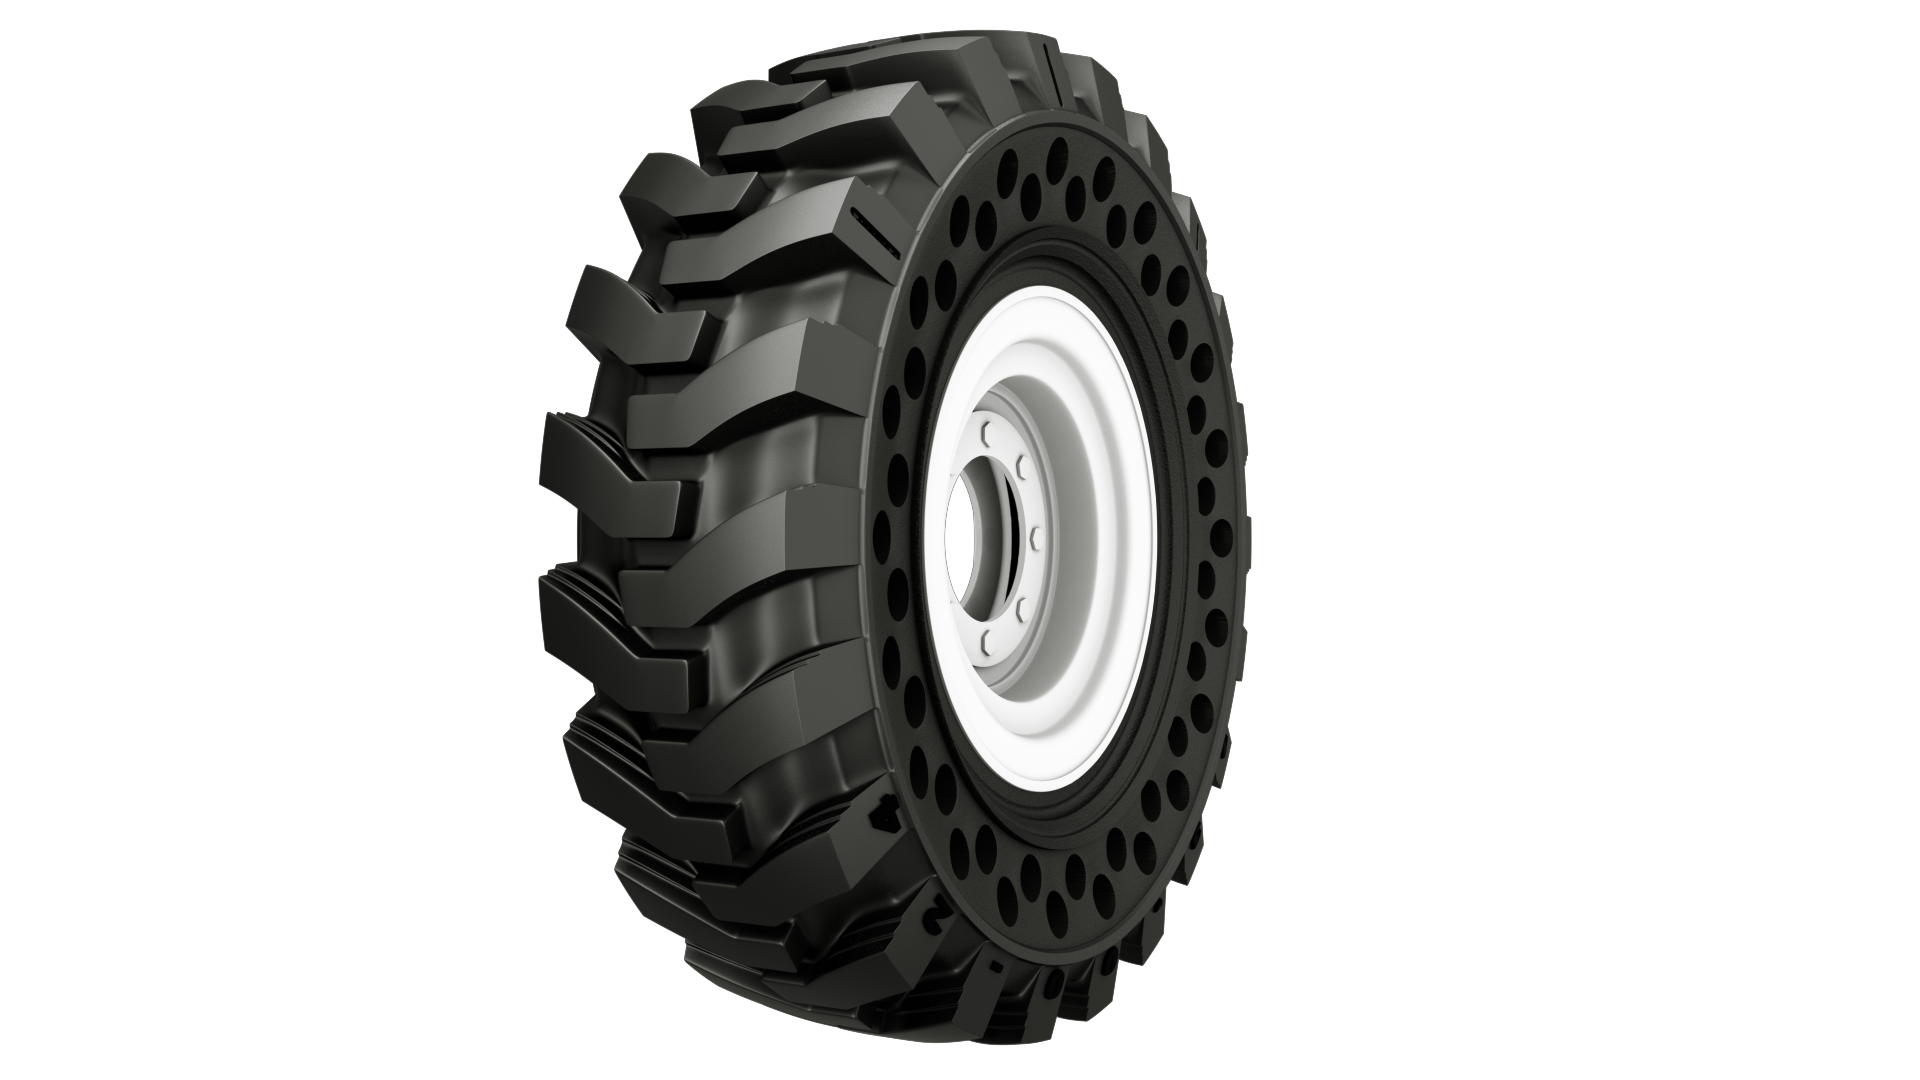 SUPER HIGH LIFT SDS GALAXY CONSTRUCTION & INDUSTRIAL Tire